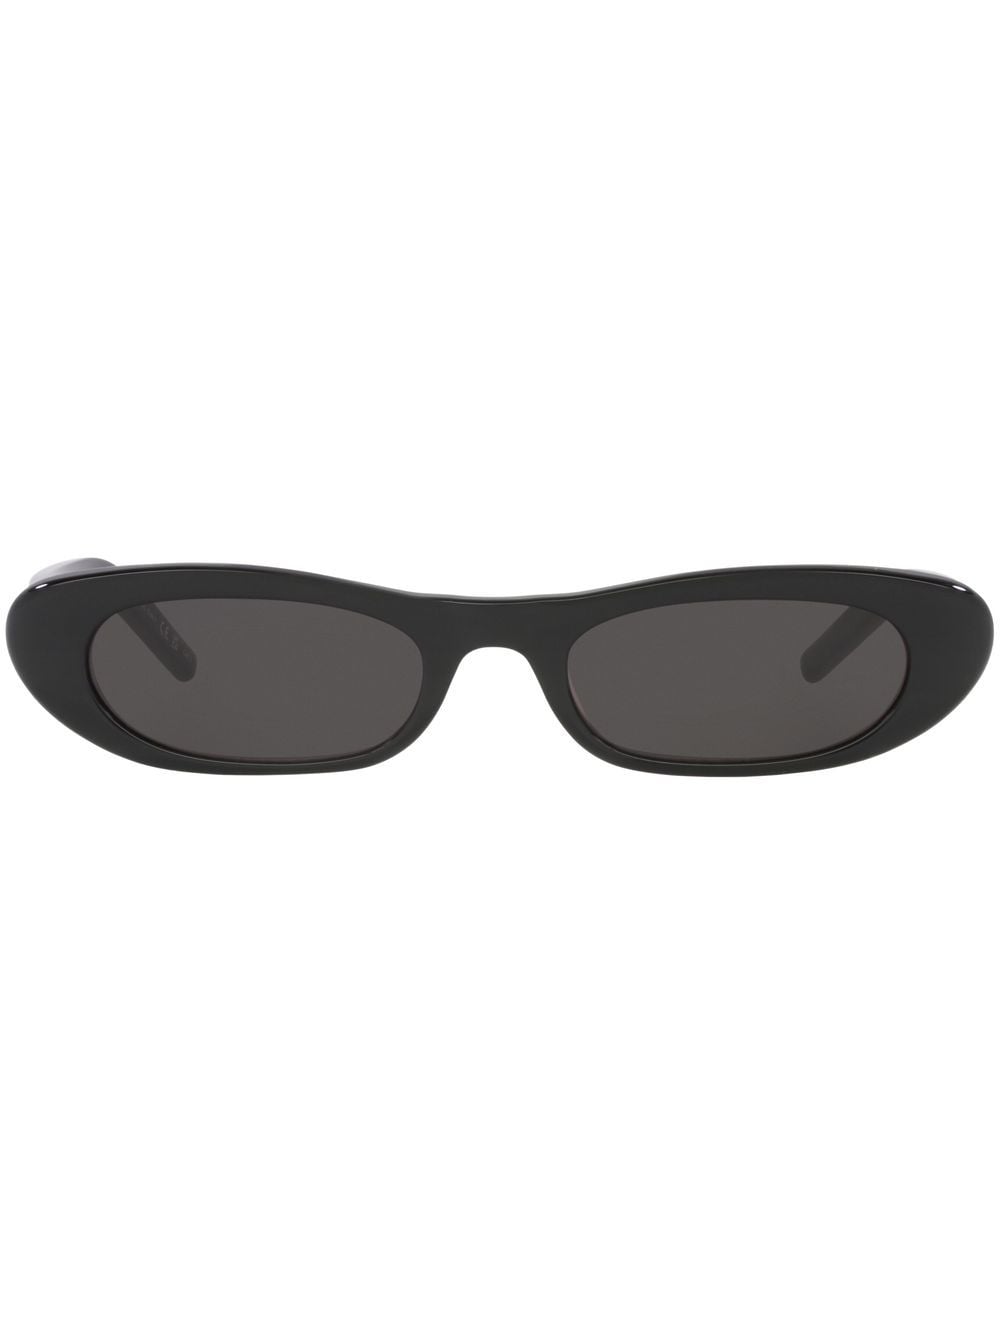 Saint Laurent Eyewear SL 557 slim oval sunglasses - Black von Saint Laurent Eyewear